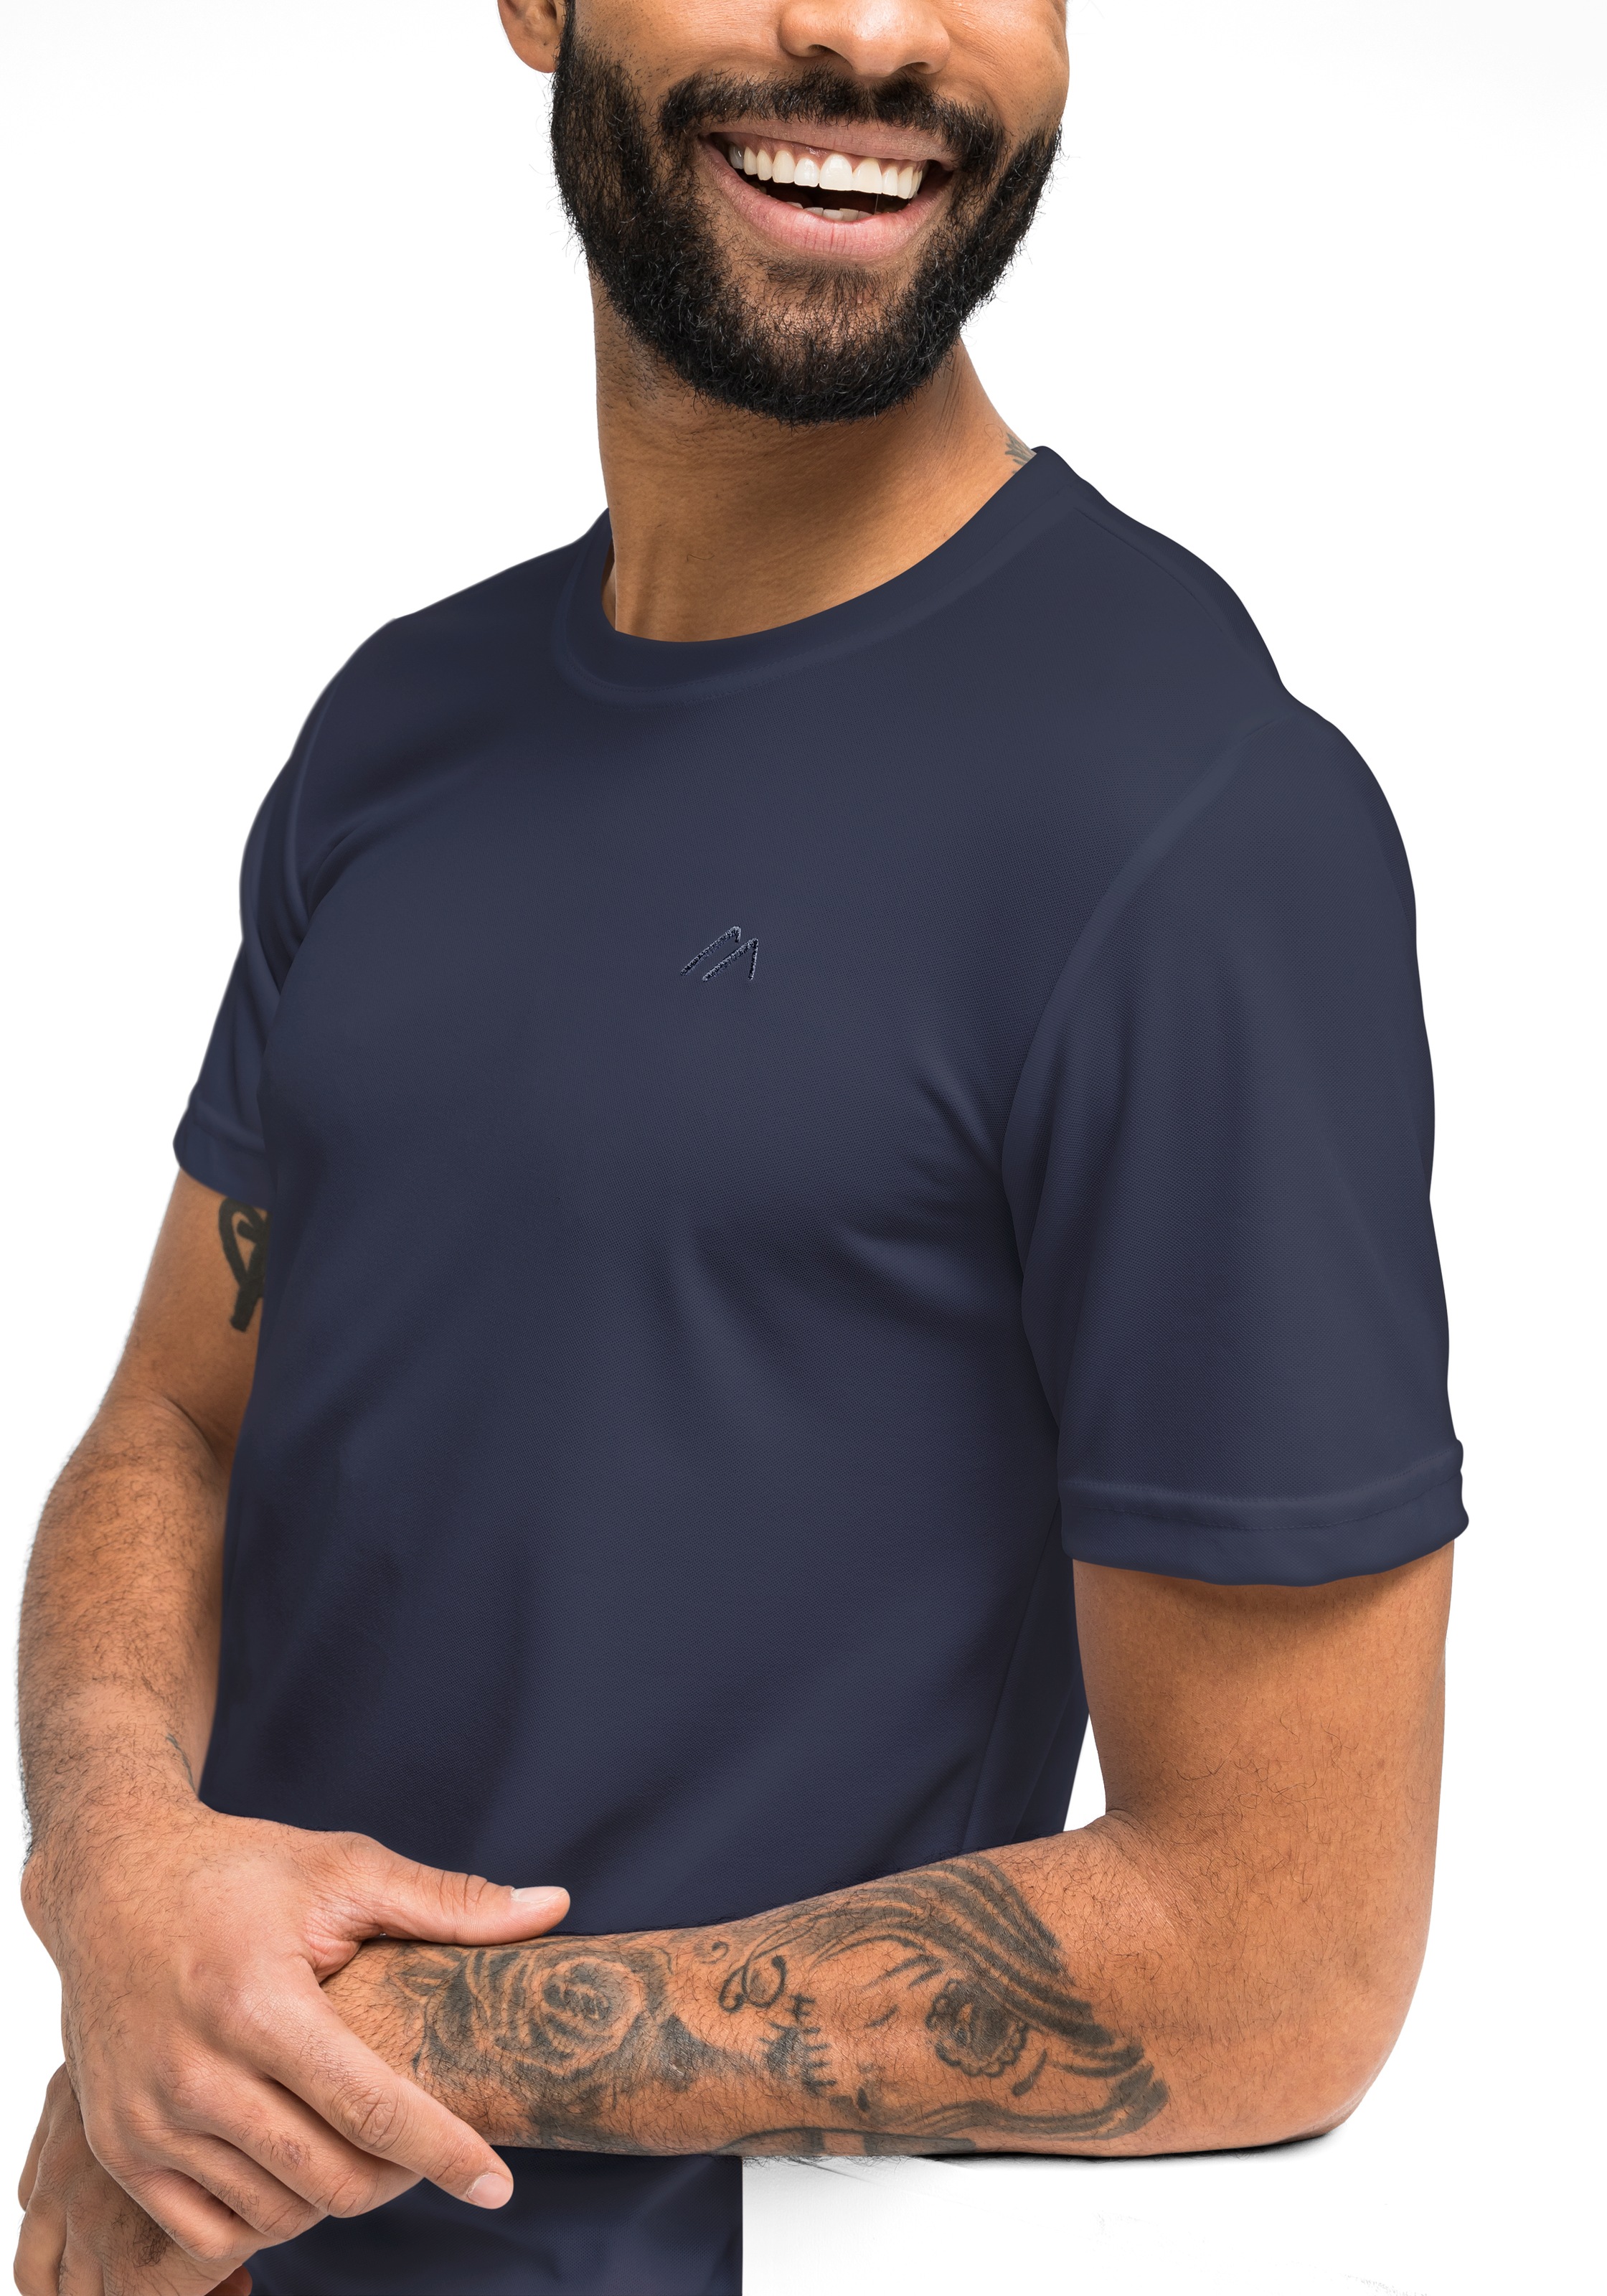 Maier Sports Funktionsshirt »Walter«, Herren T-Shirt, rundhals pique Outdoorshirt, schnelltrocknend